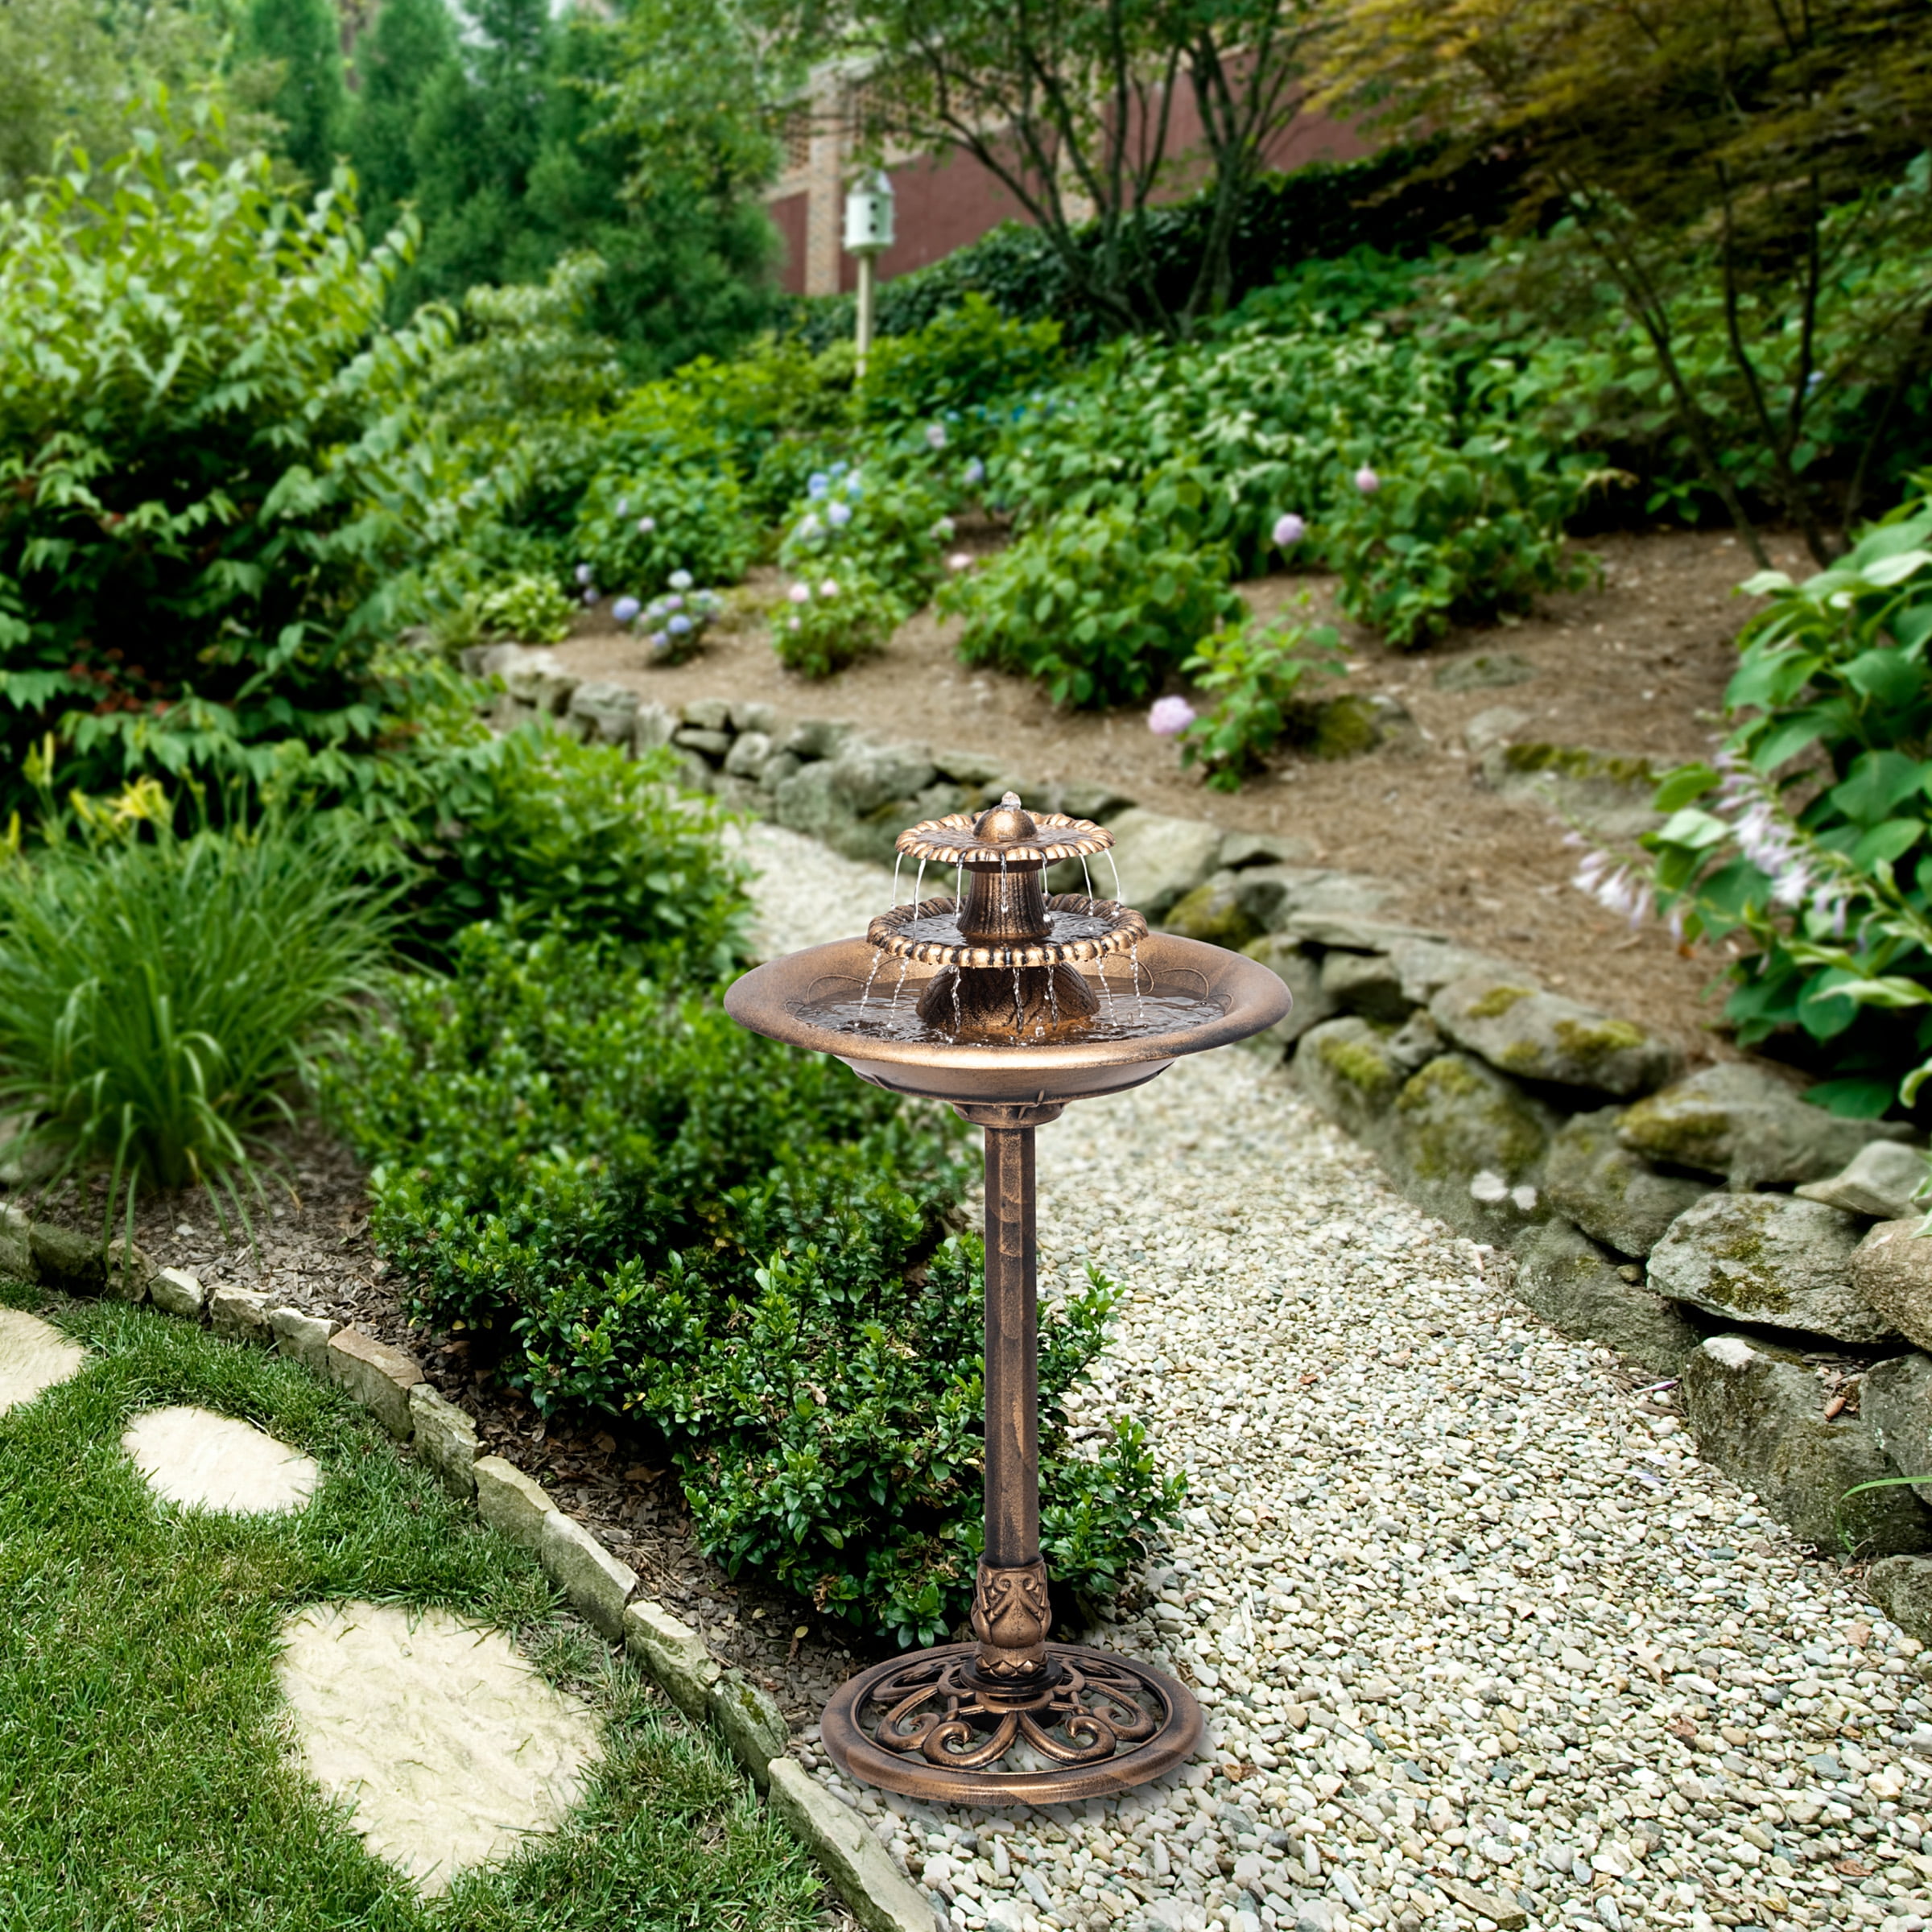 Details about  / Bird Bath Fountain 3 Tier Outdoor Water Pump Bowl Garden Resin Backyard Decor